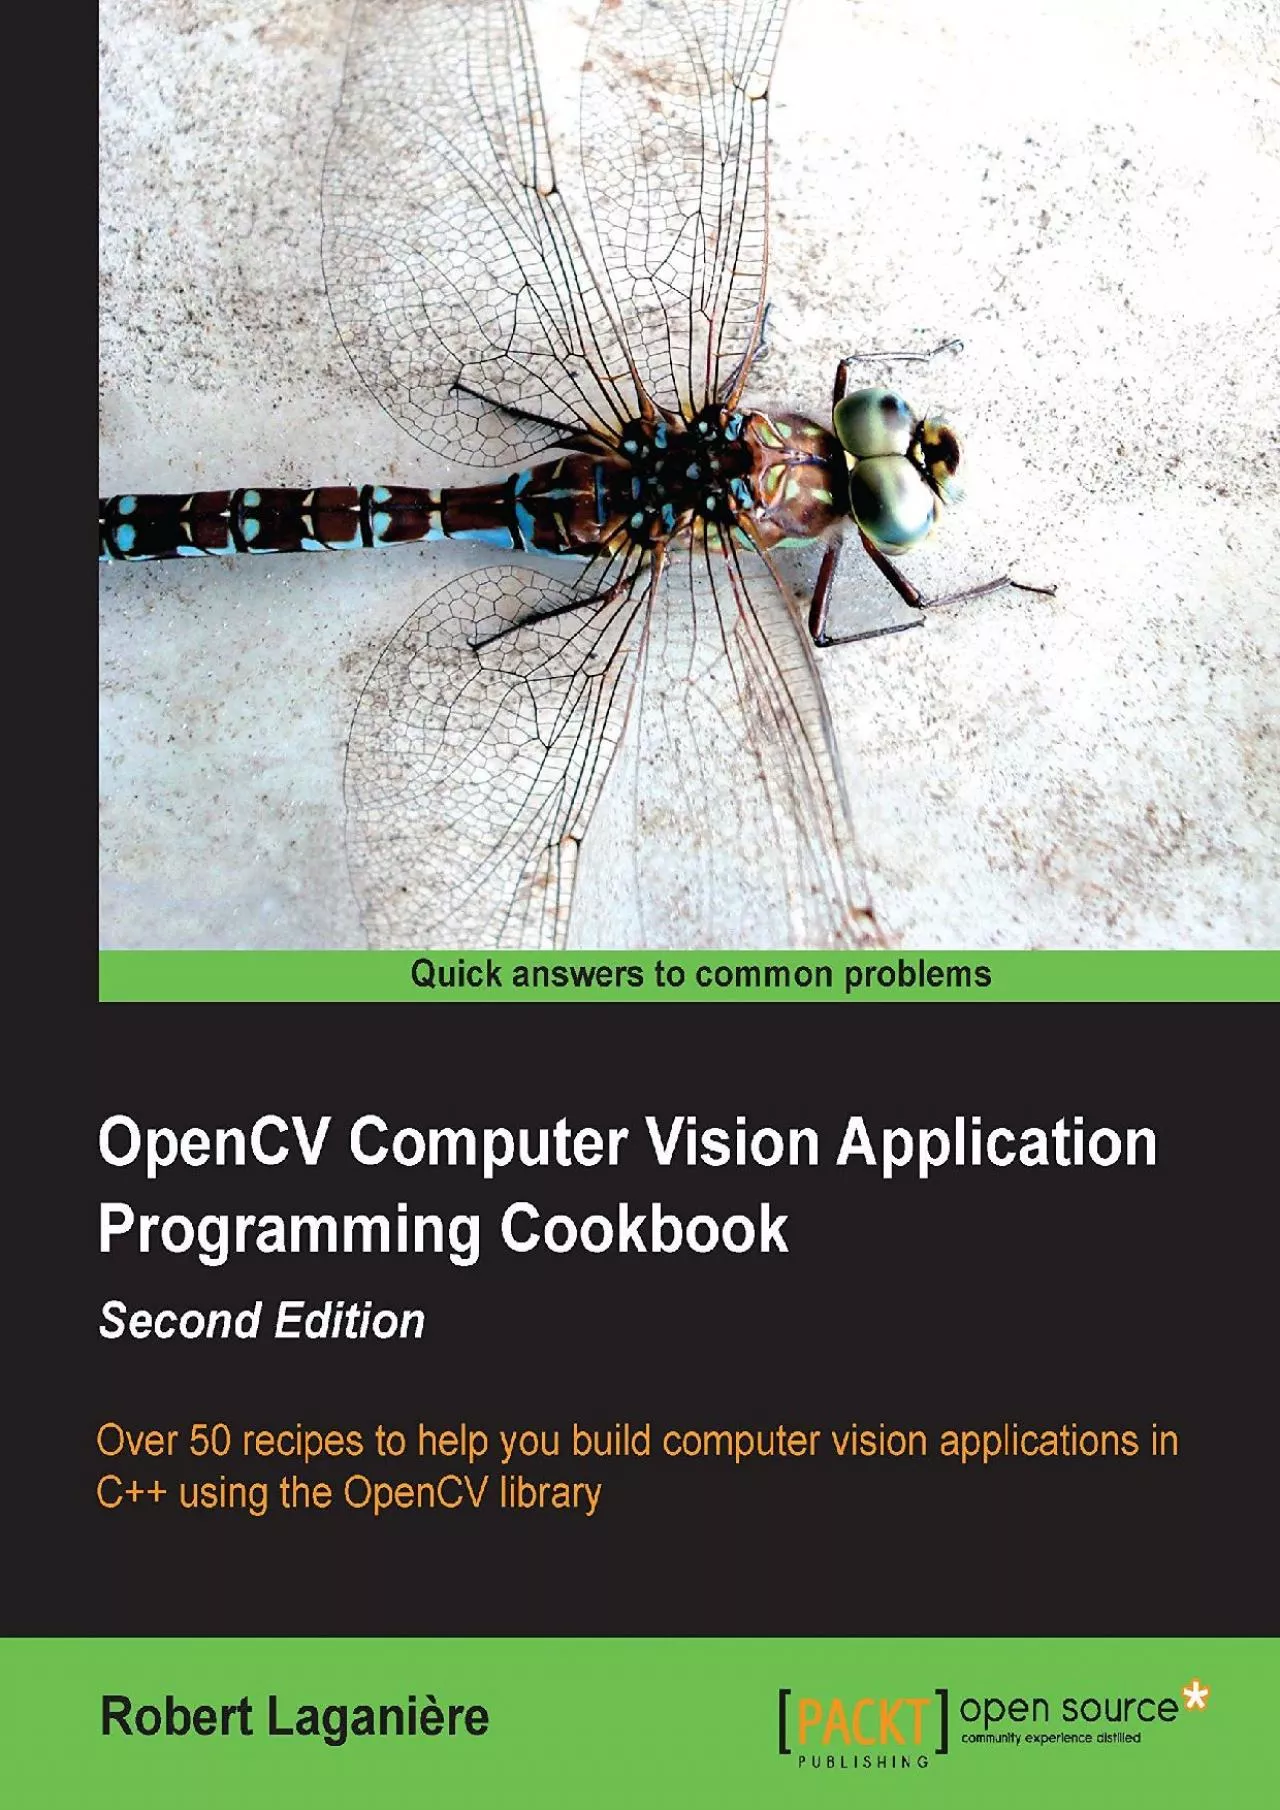 [DOWLOAD]-OpenCV Computer Vision Application Programming Cookbook Second Edition